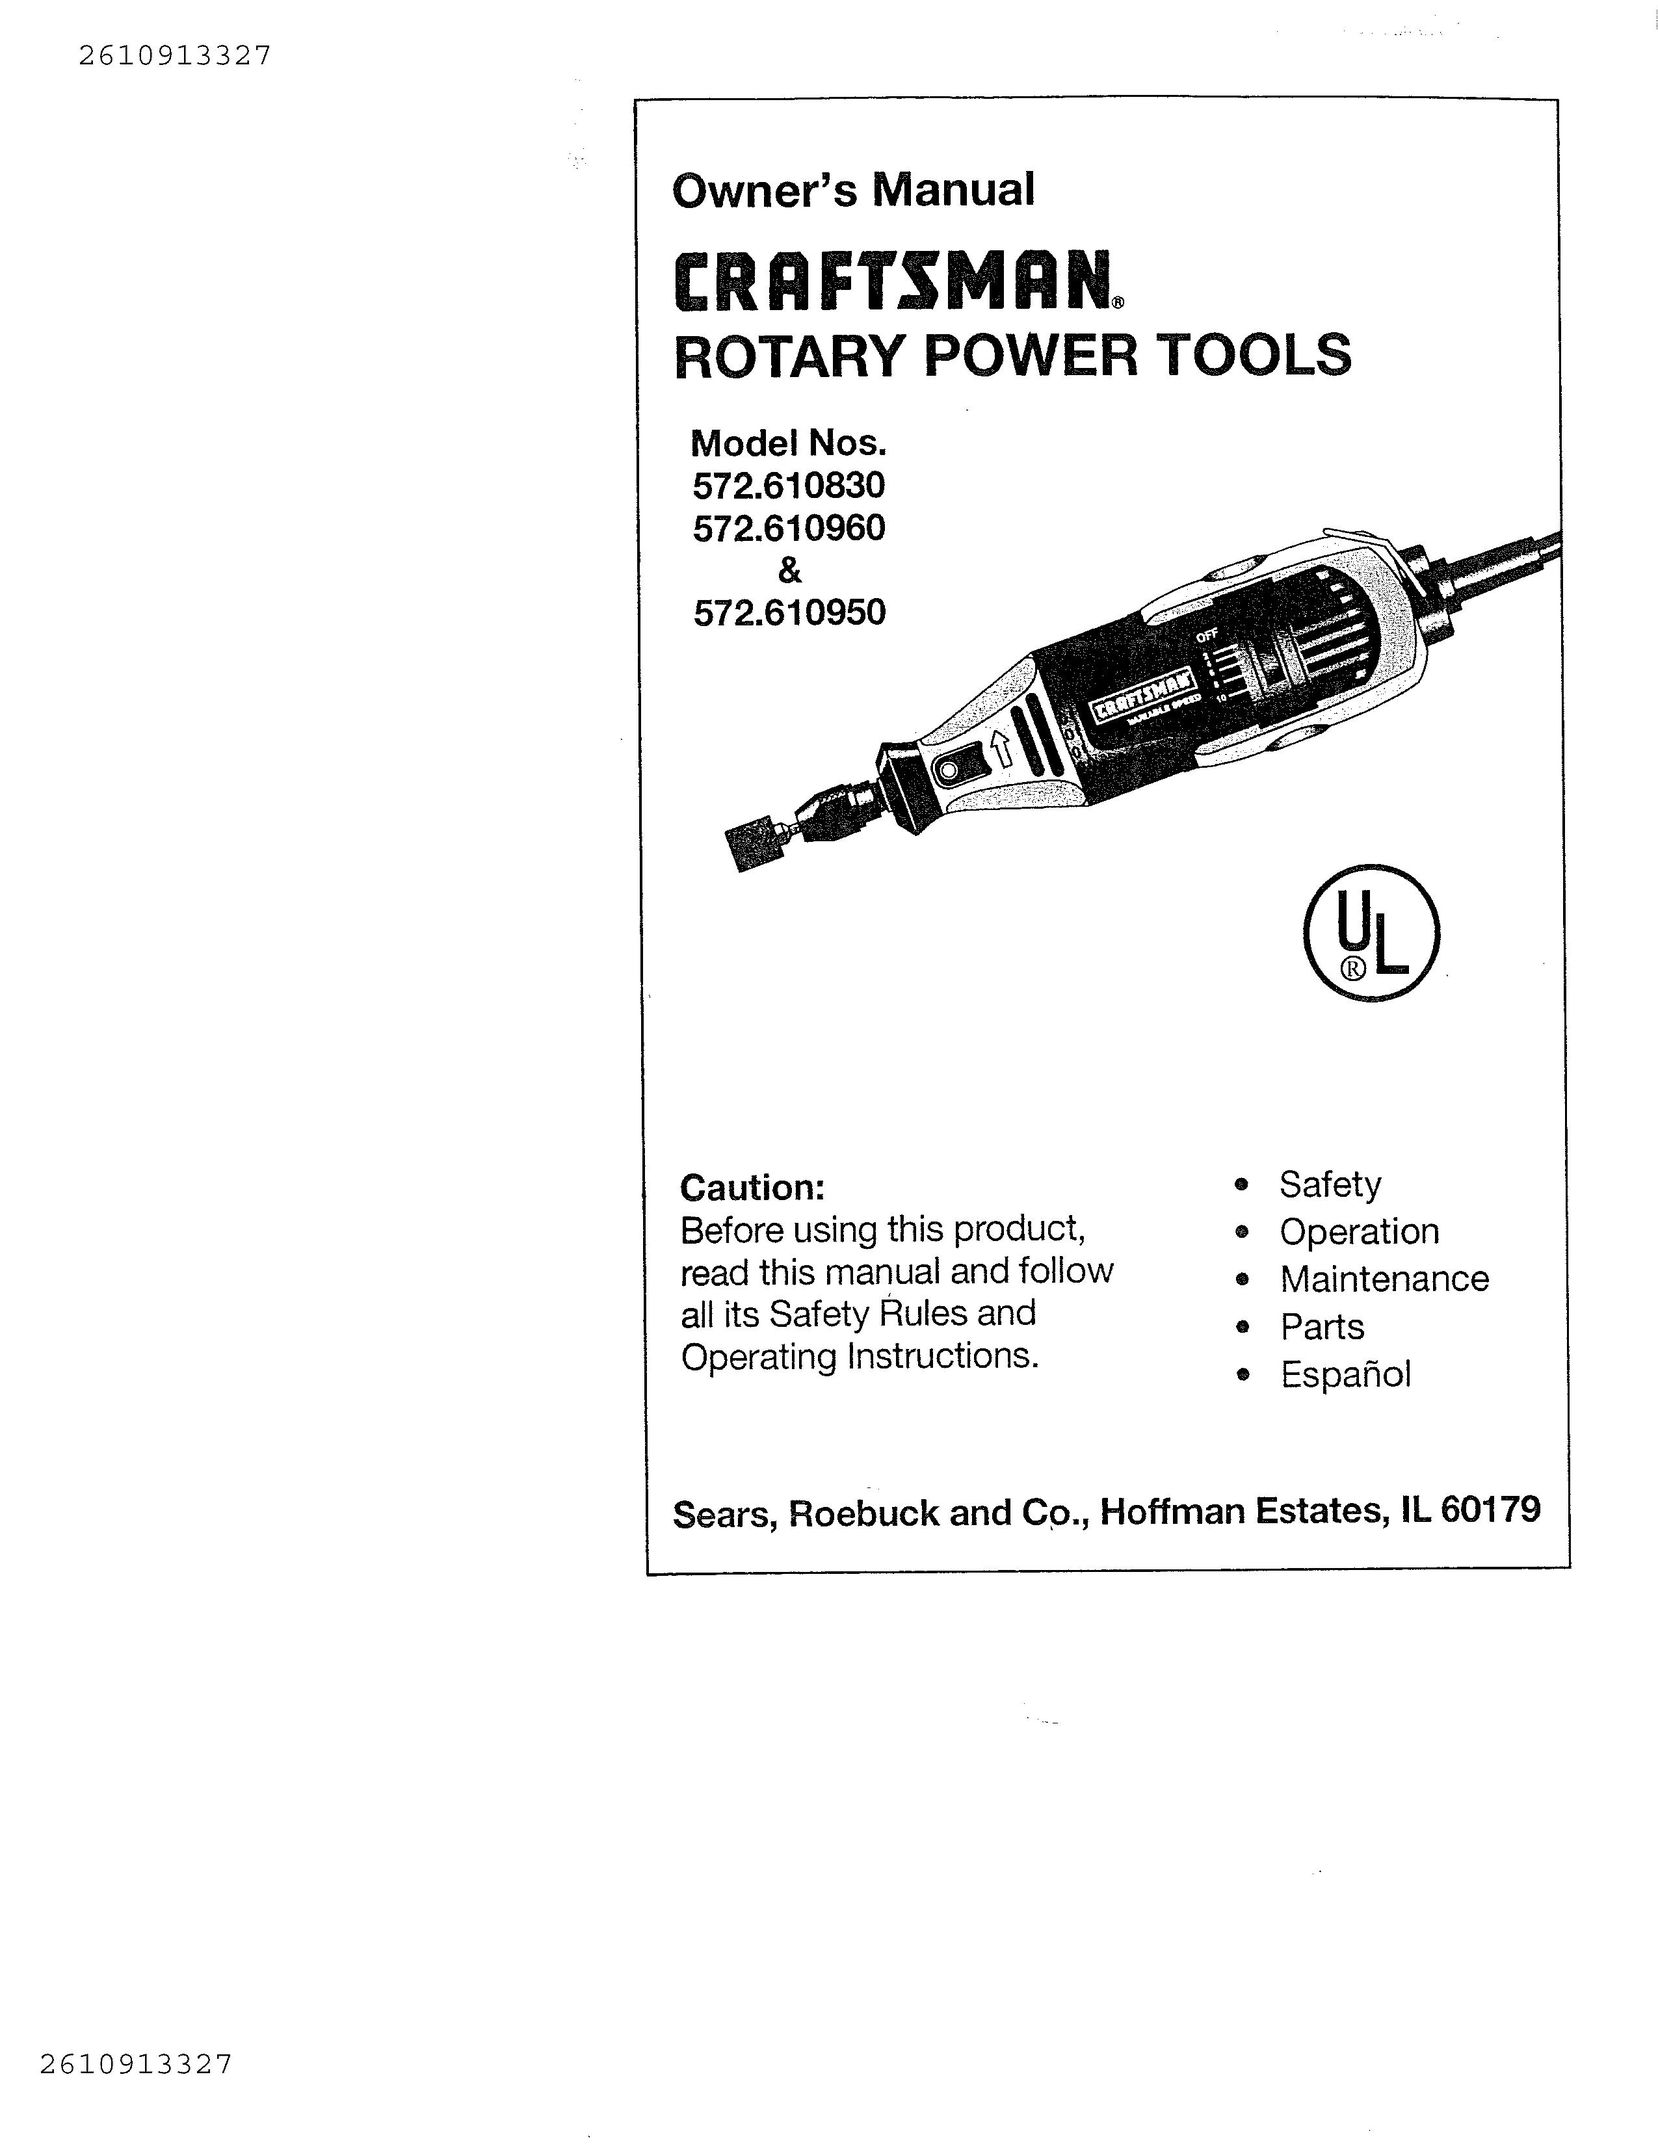 Craftsman 572.61083 Power Hammer User Manual